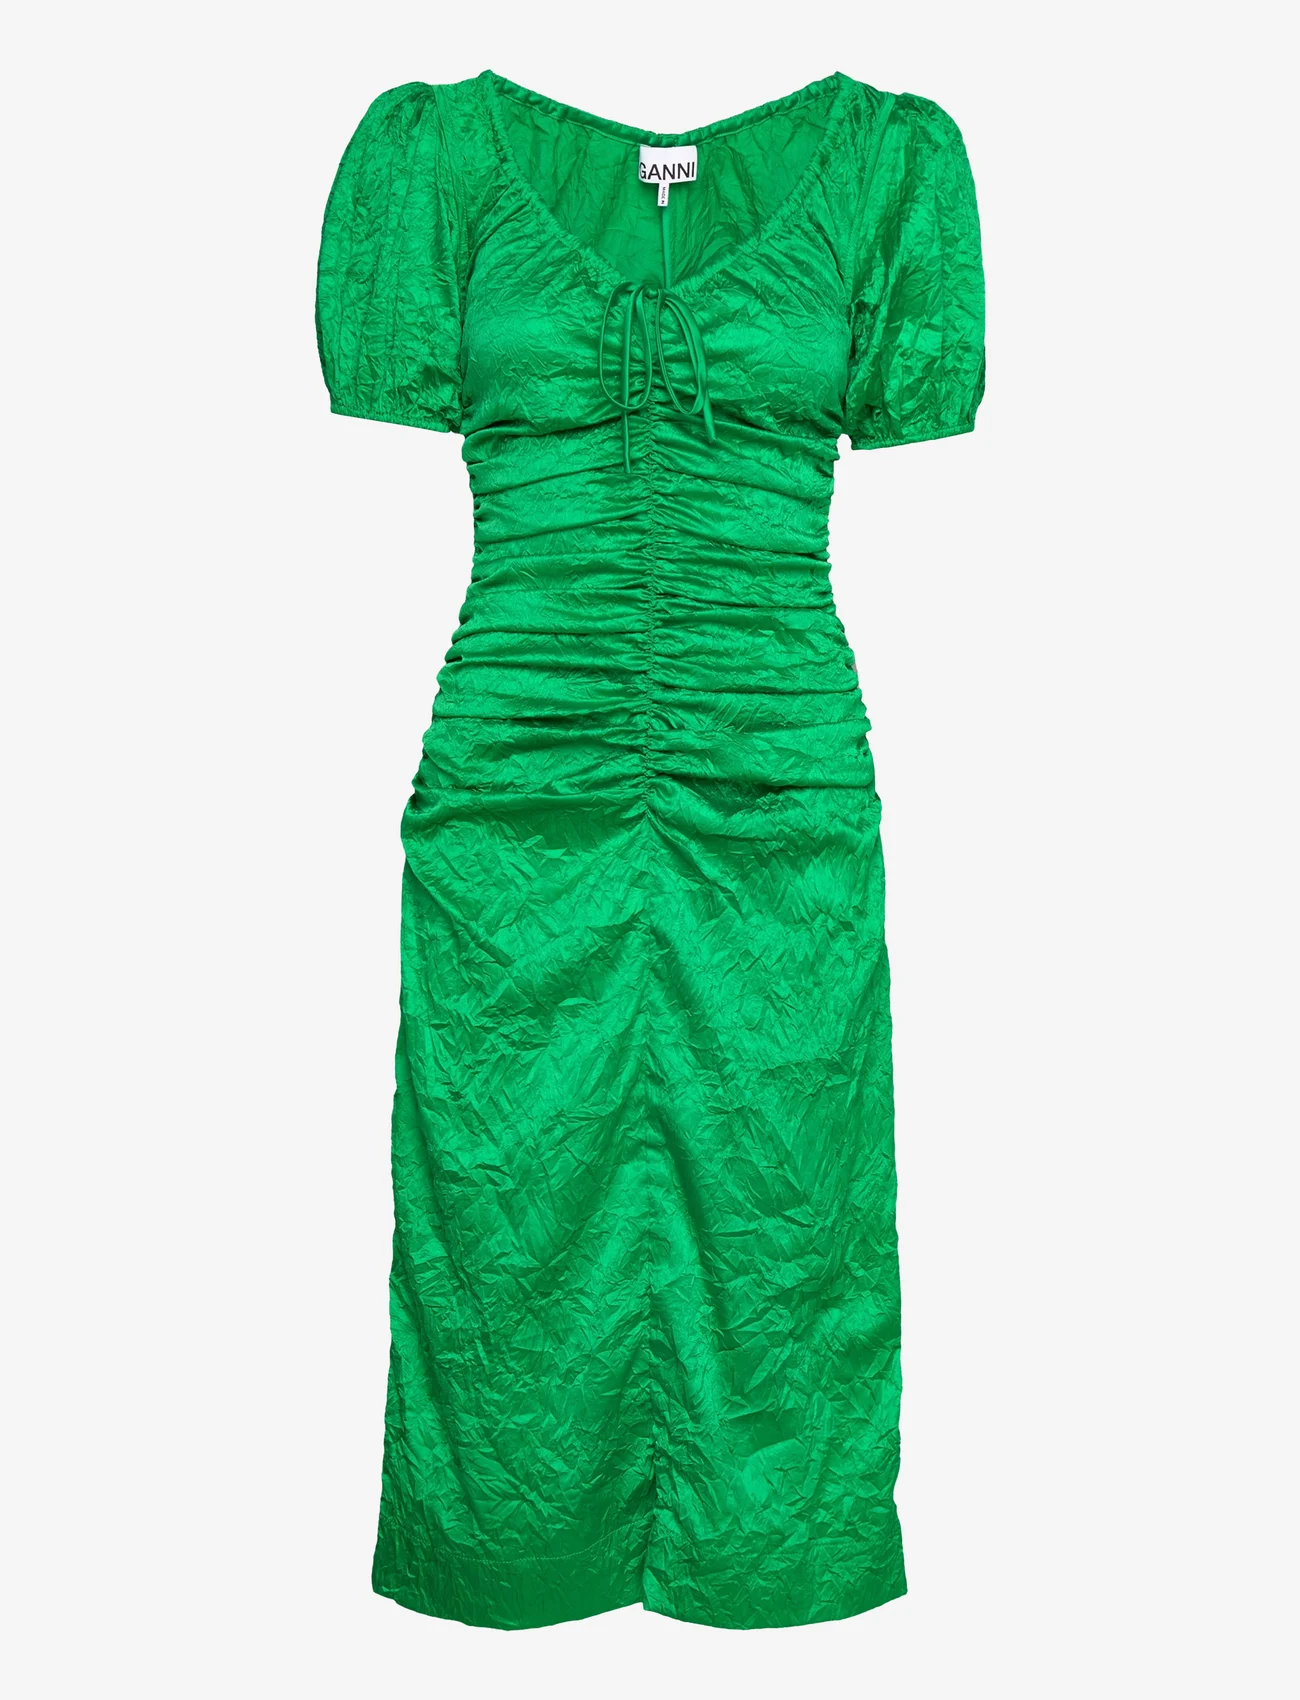 Ganni - Crinkled Satin - party dresses - bright green - 0